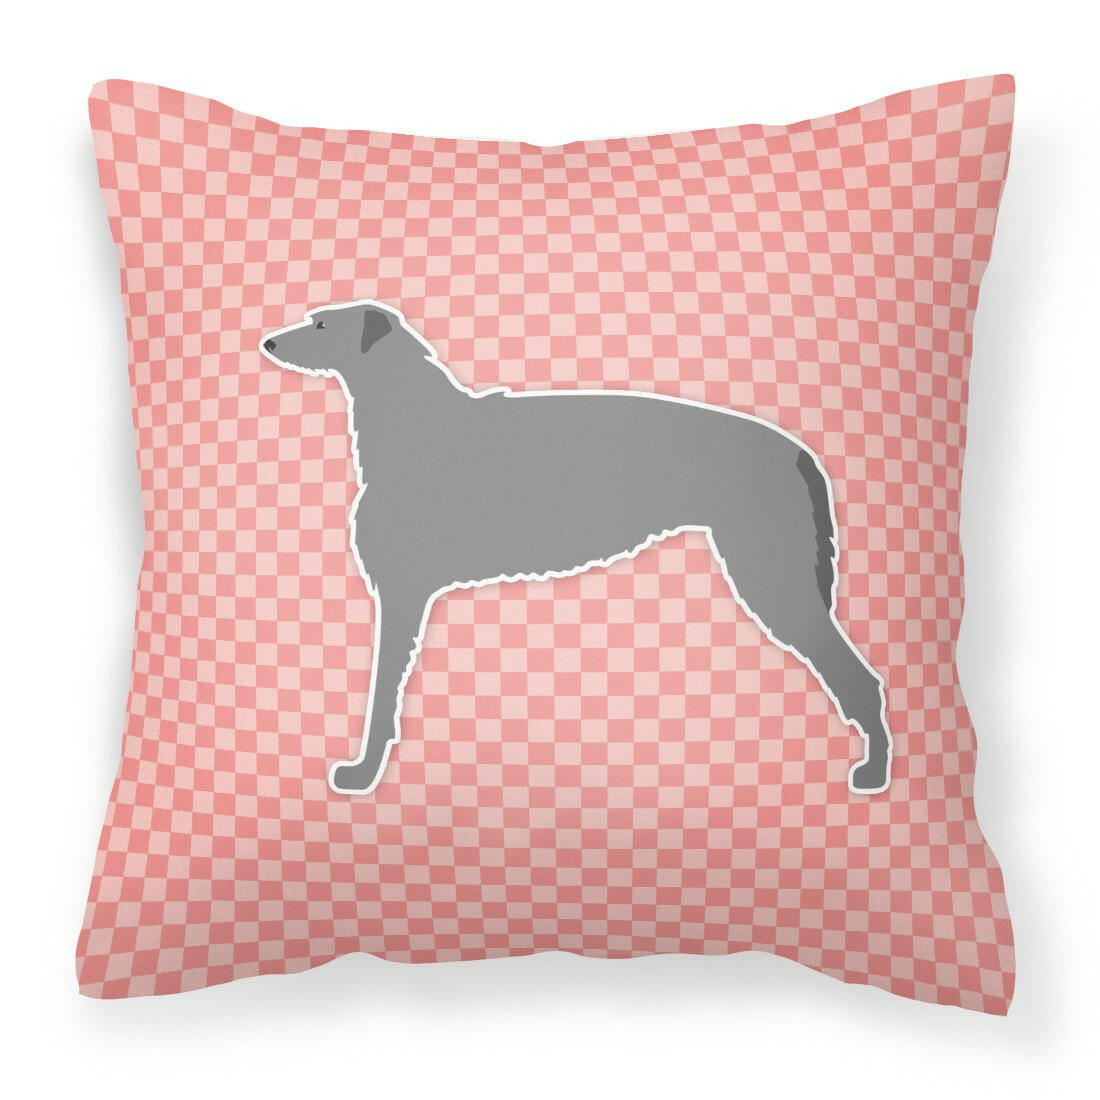 Scottish Deerhound Checkerboard Pink Fabric Decorative Pillow BB3596PW1818 by Caroline's Treasures